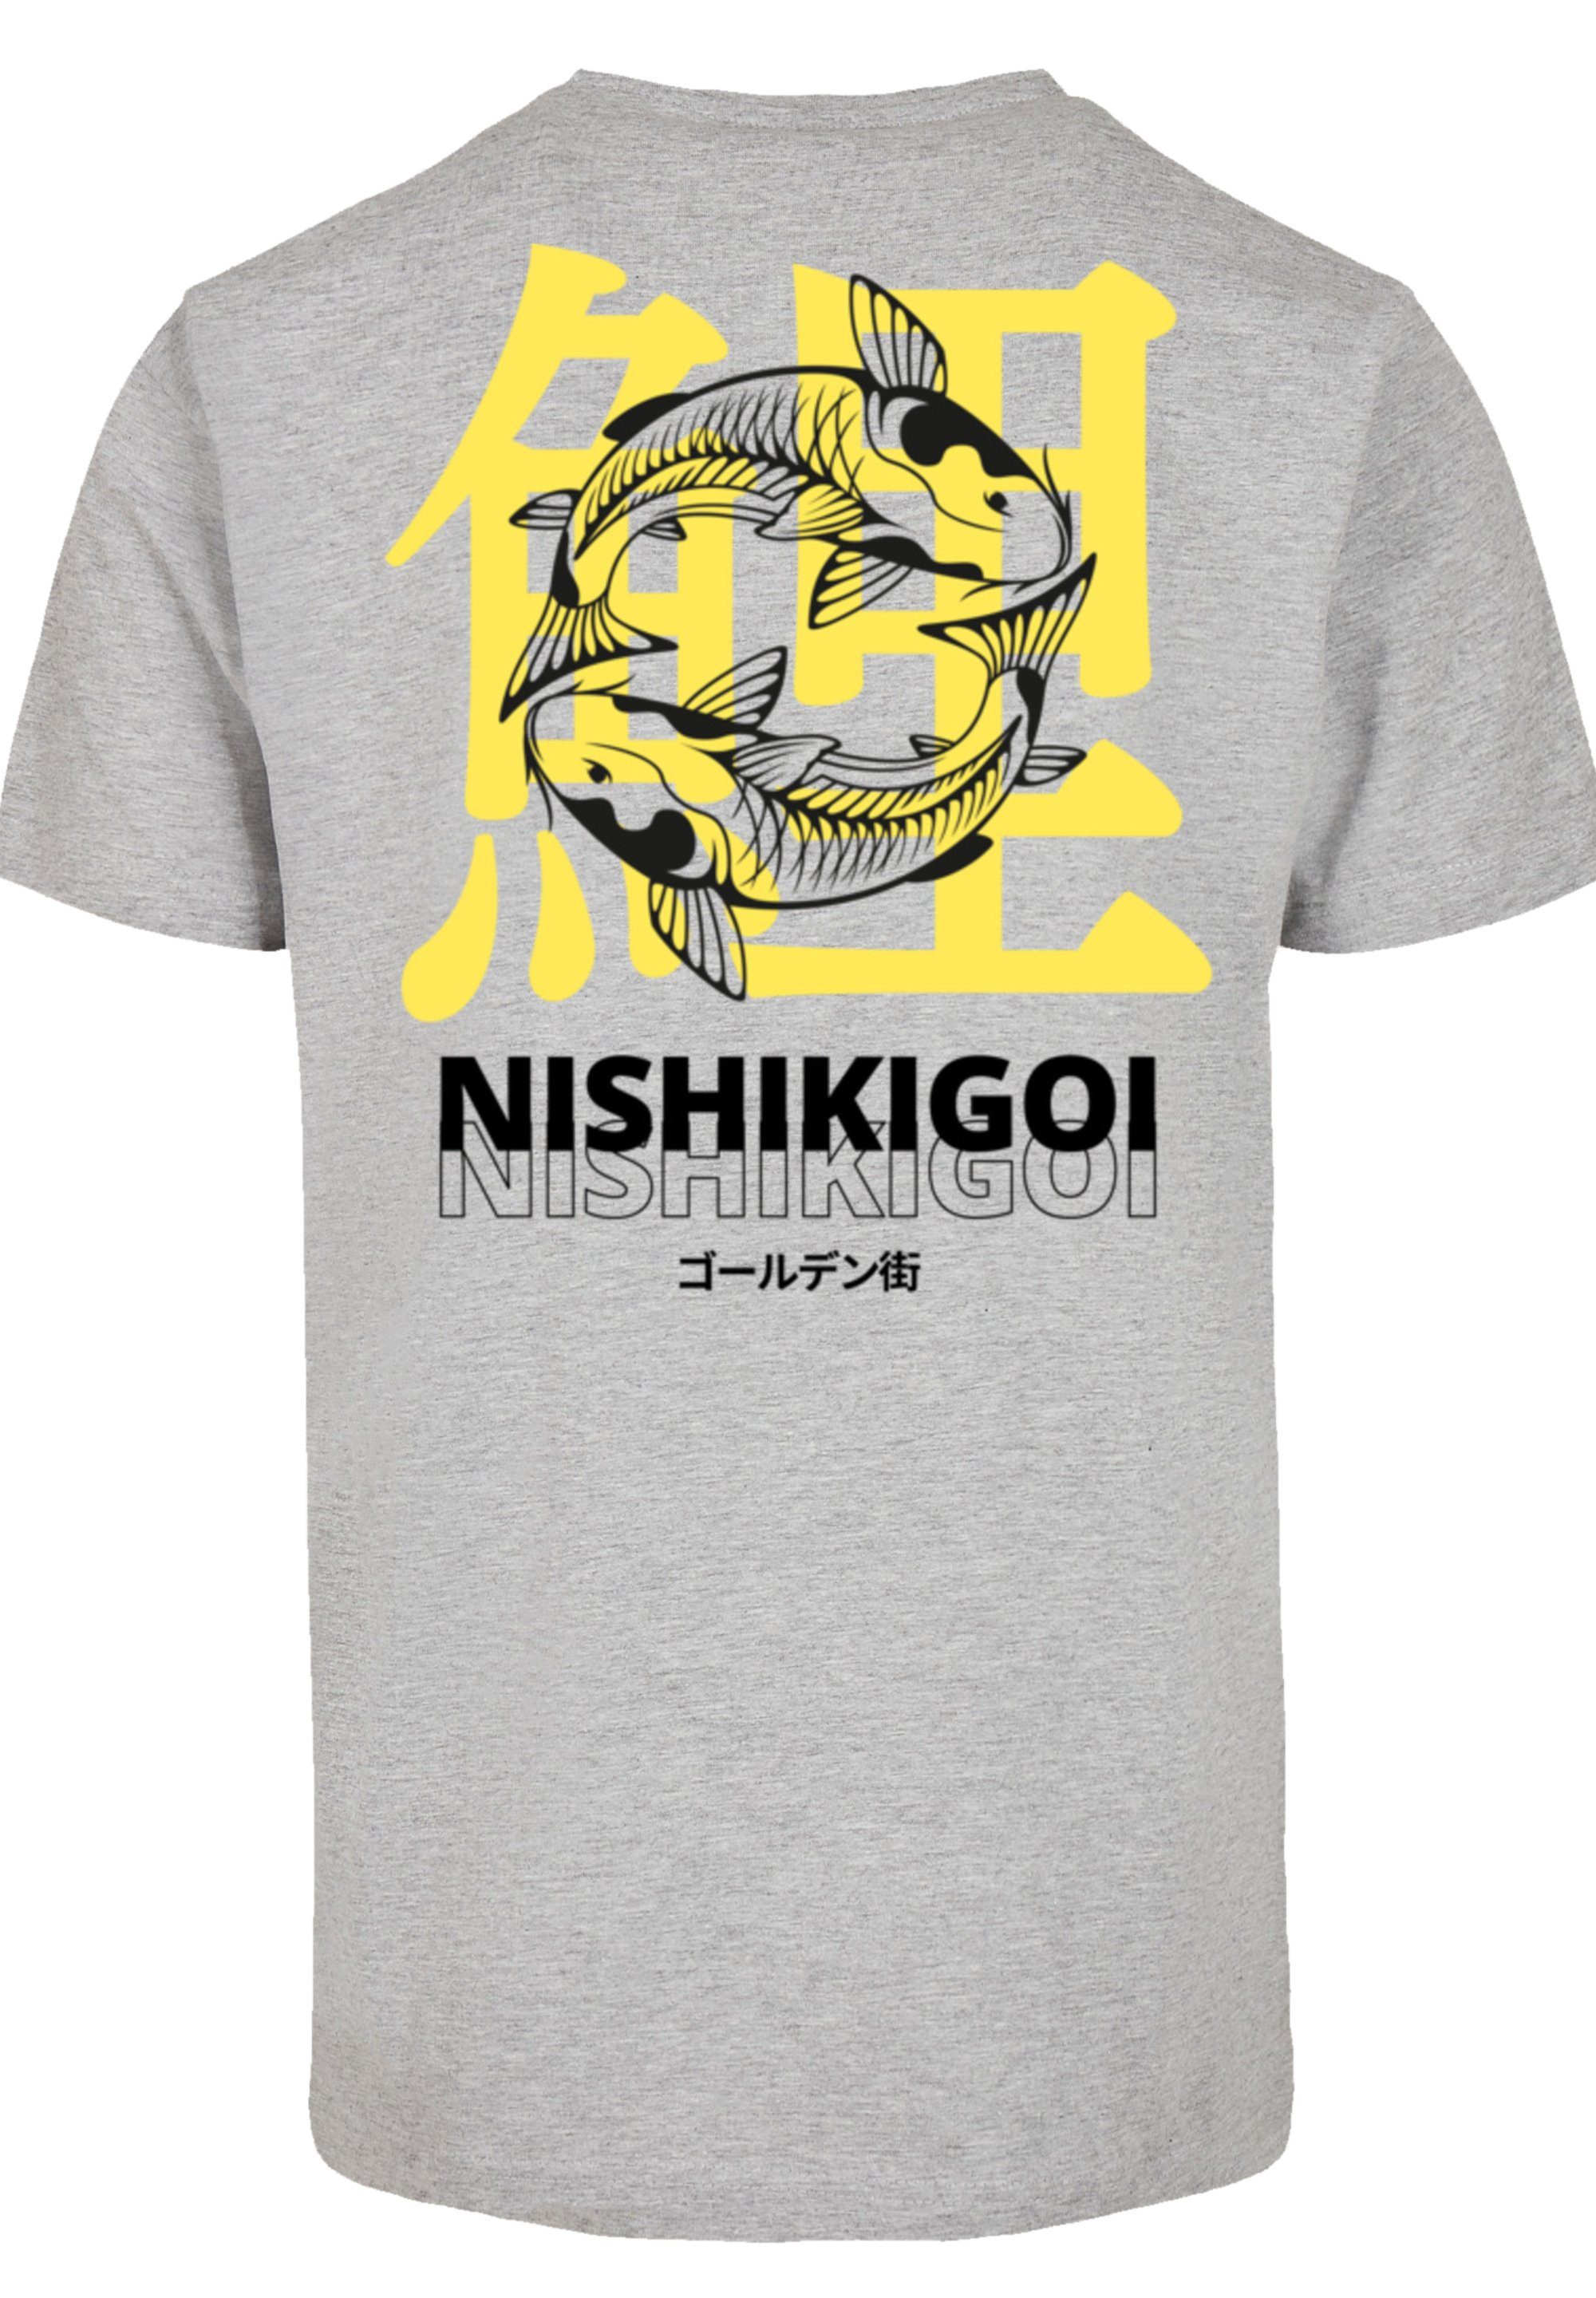 F4NT4STIC T-Shirt Koi Golden grey Gai Print heather